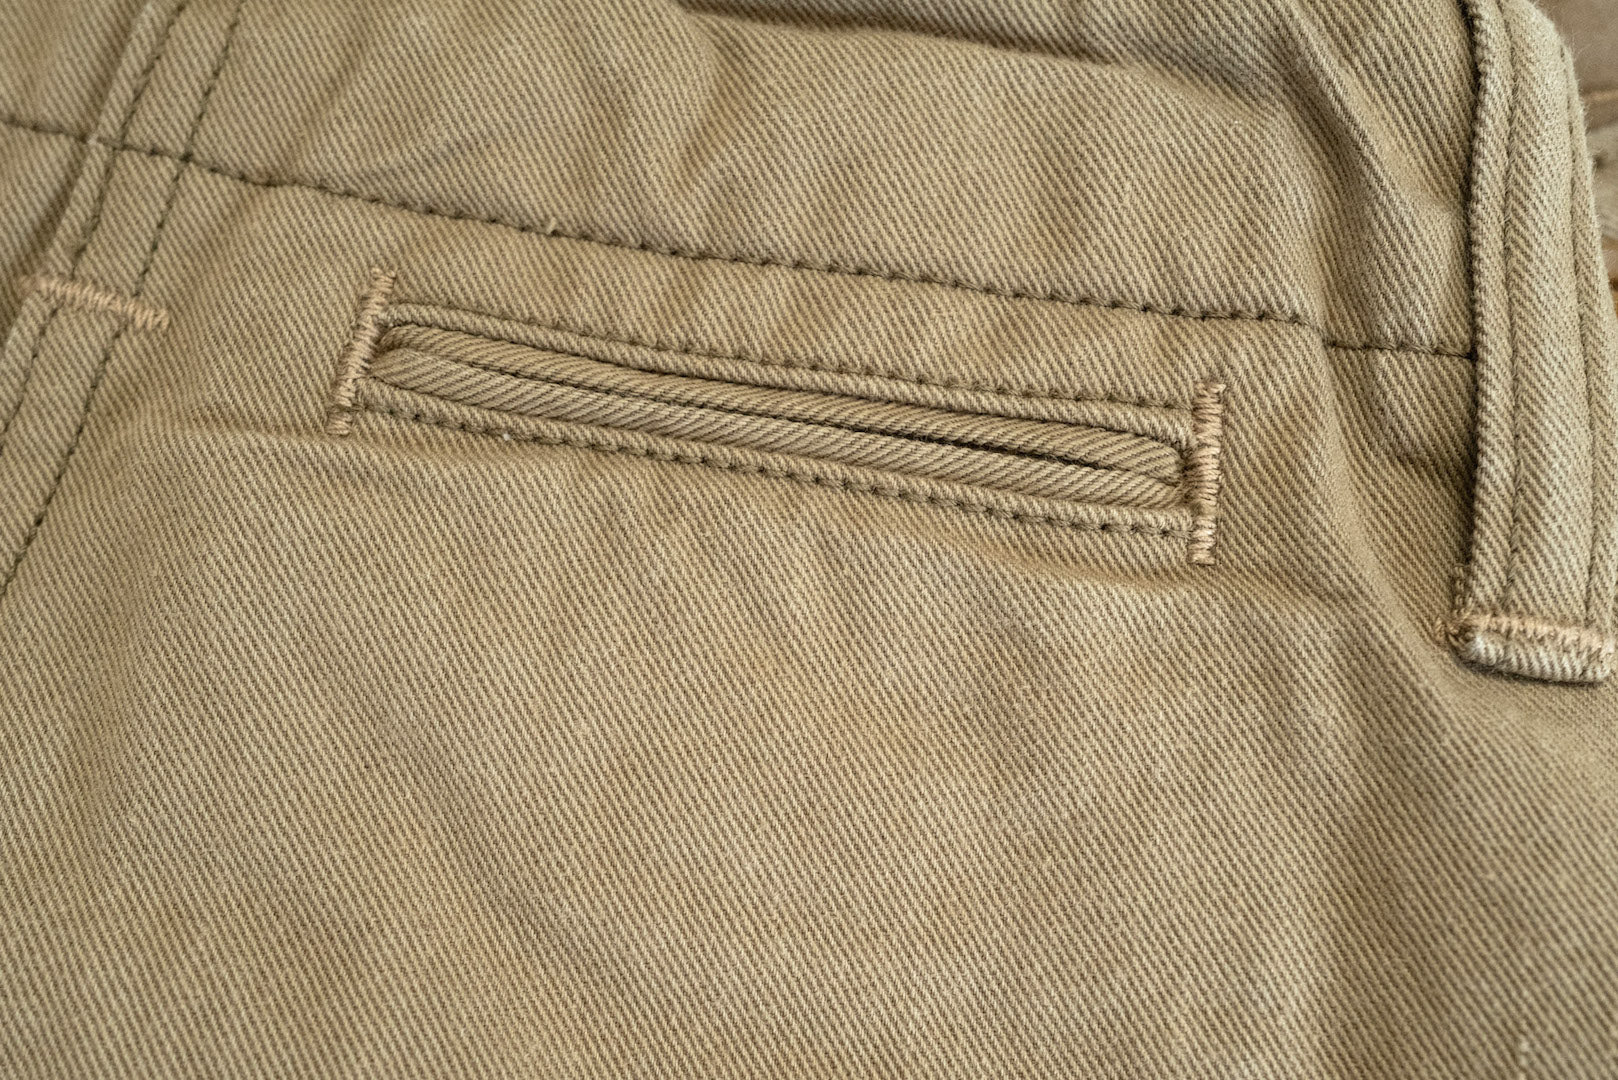 Freewheelers M-1941 Duck Chino Trousers (Khaki)